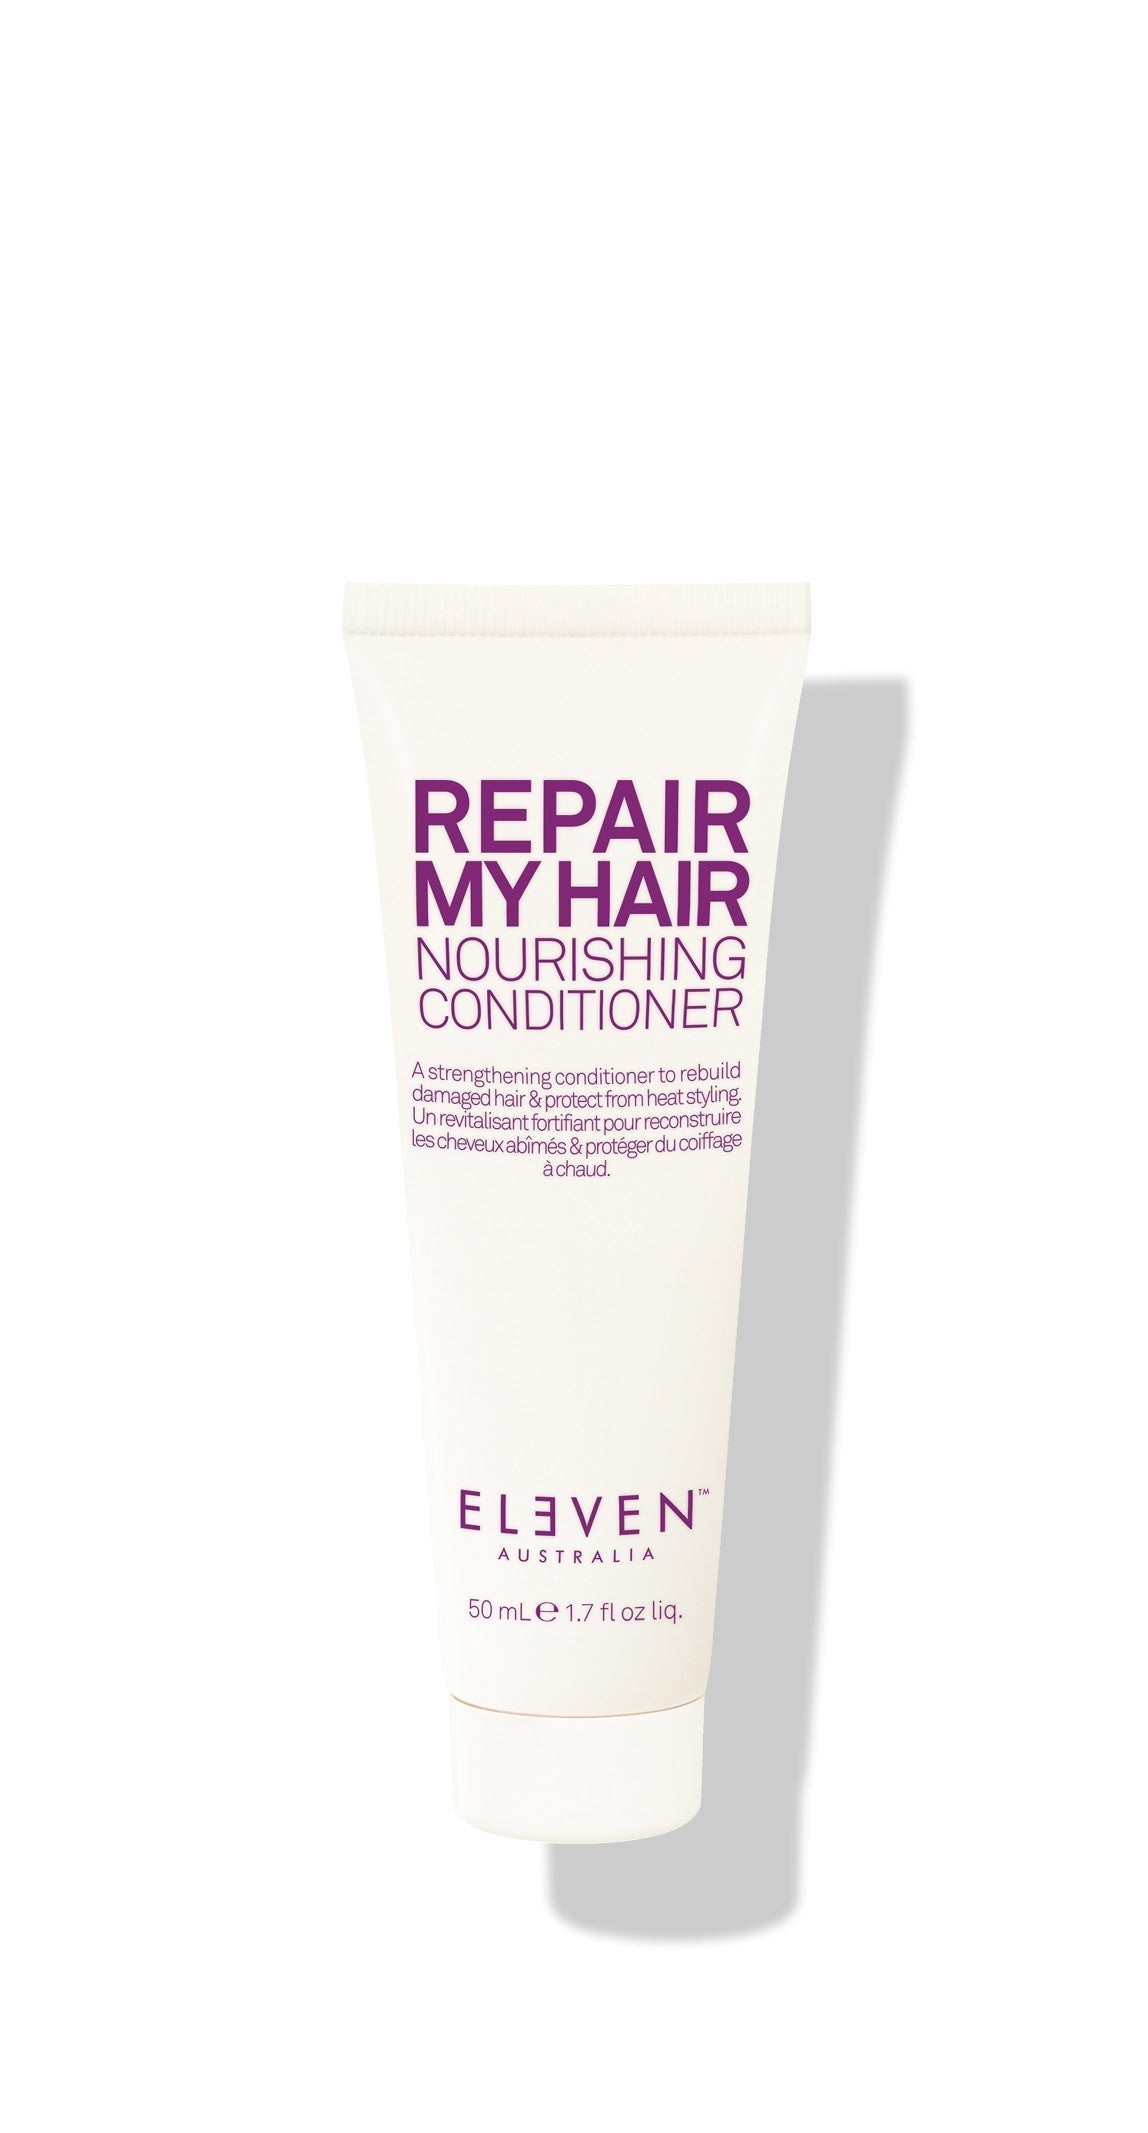 Repair My Hair Nourishing Conditioner - 50ml - ELEVEN Australia